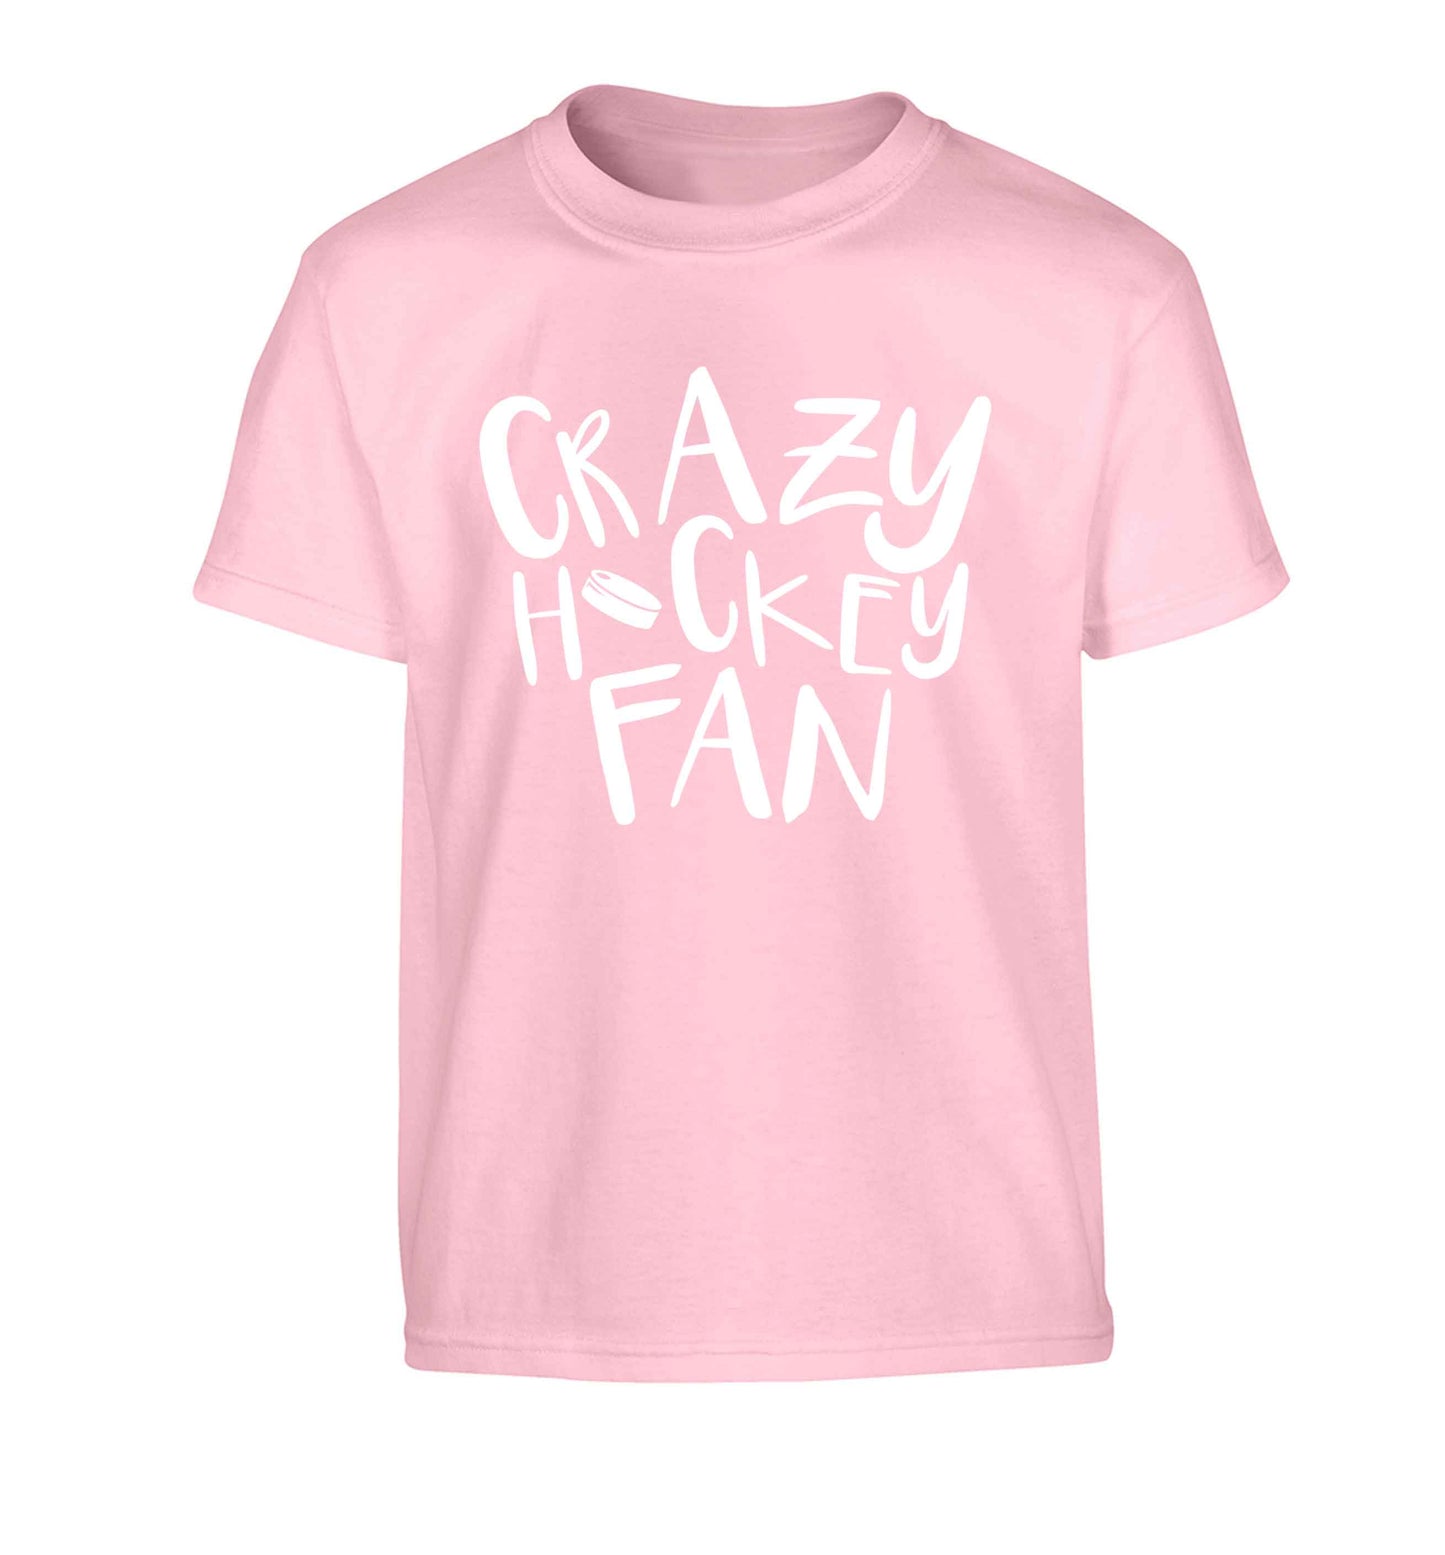 Crazy hockey fan Children's light pink Tshirt 12-13 Years